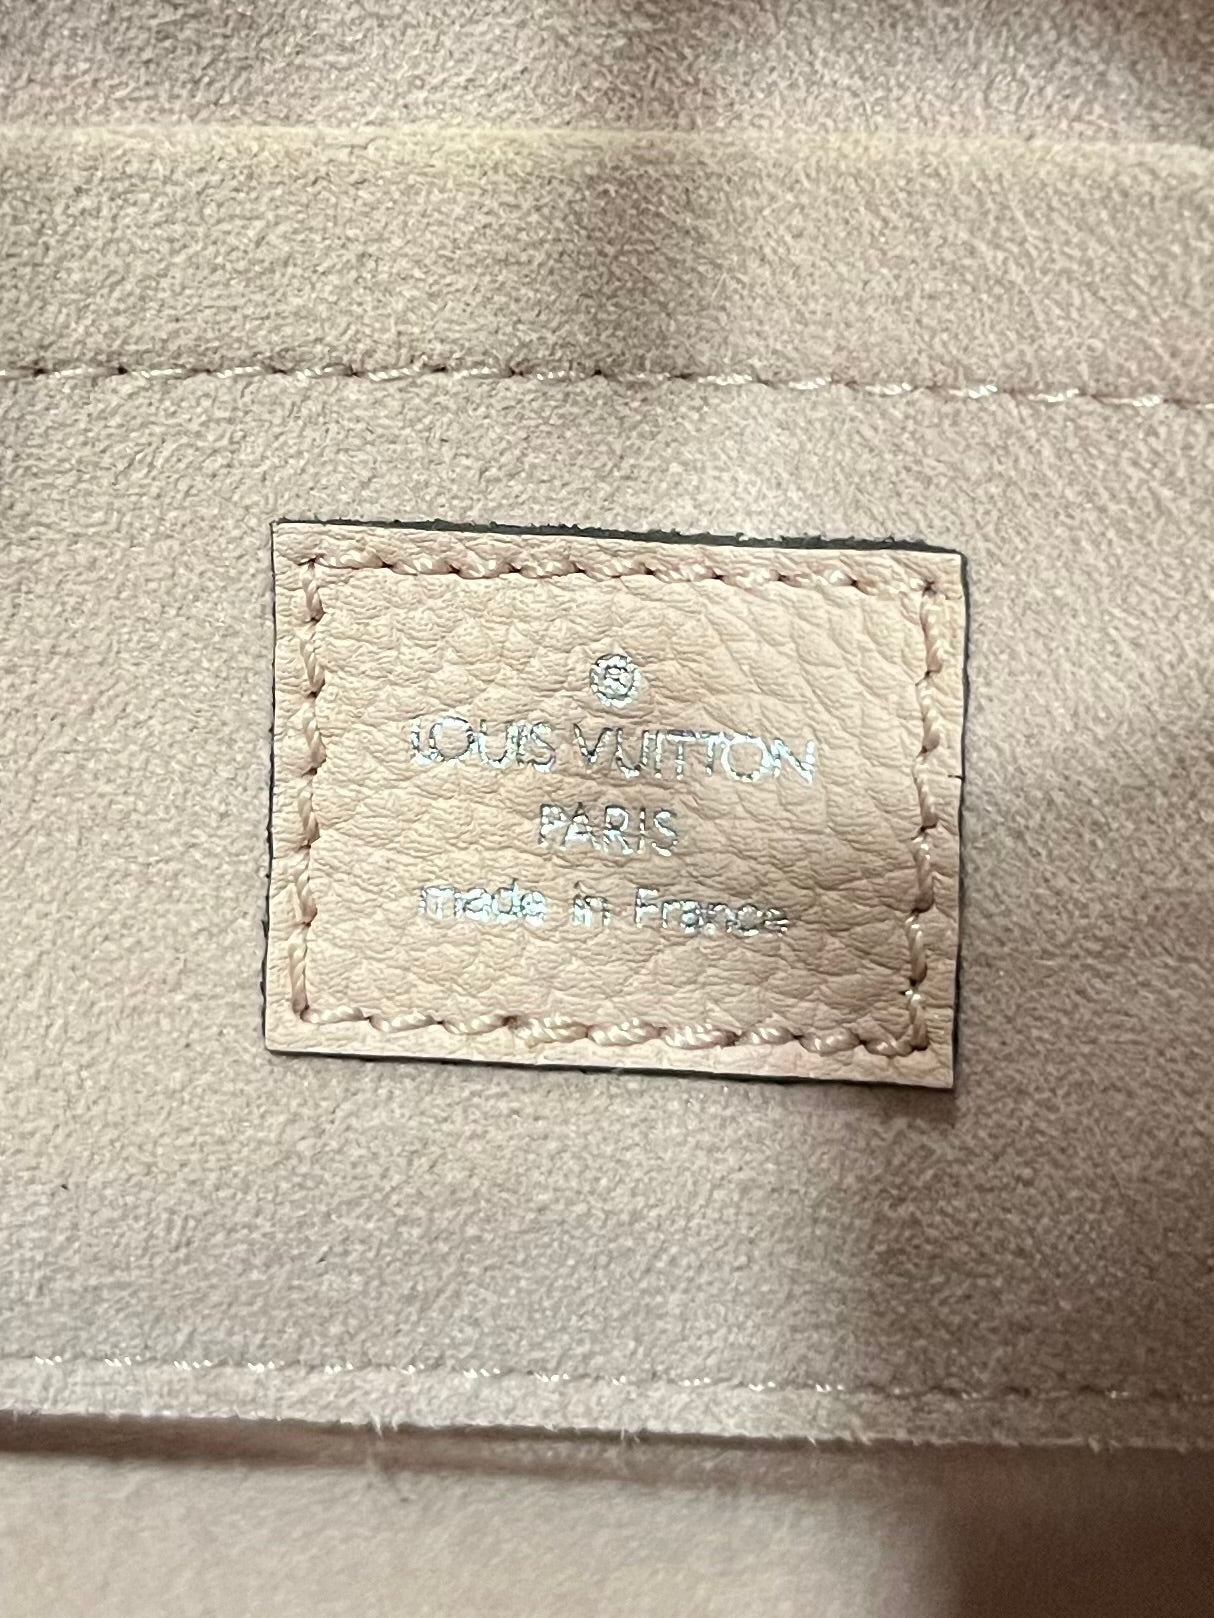 Louis Vuitton Magnolia Monogram Mahina Leather Scala Mini Pouch